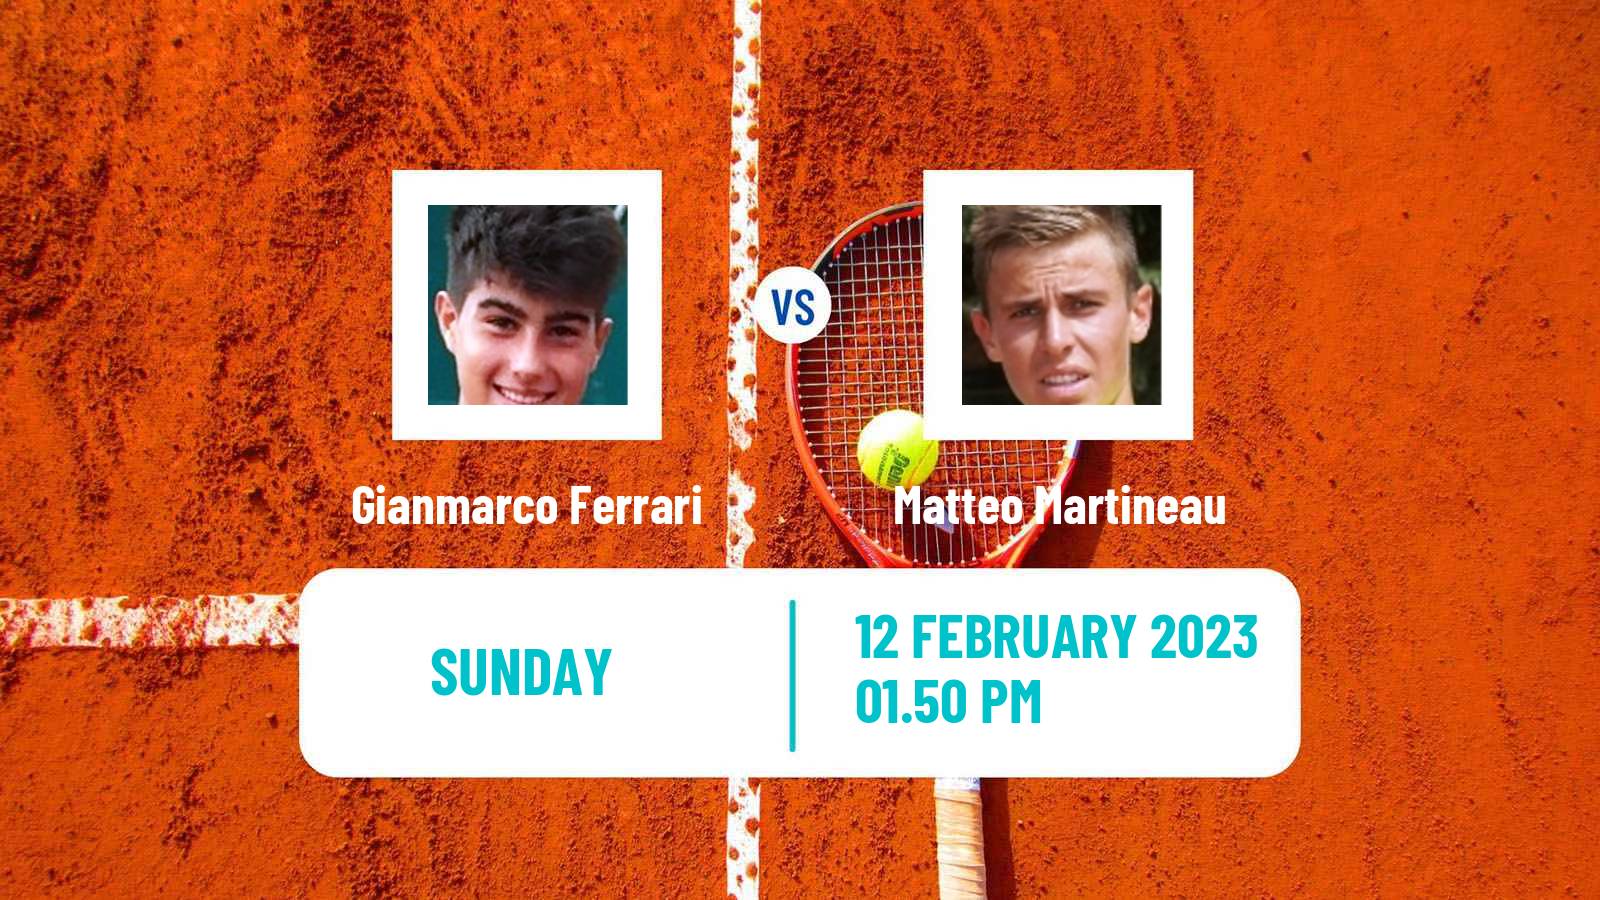 Tennis ATP Challenger Gianmarco Ferrari - Matteo Martineau